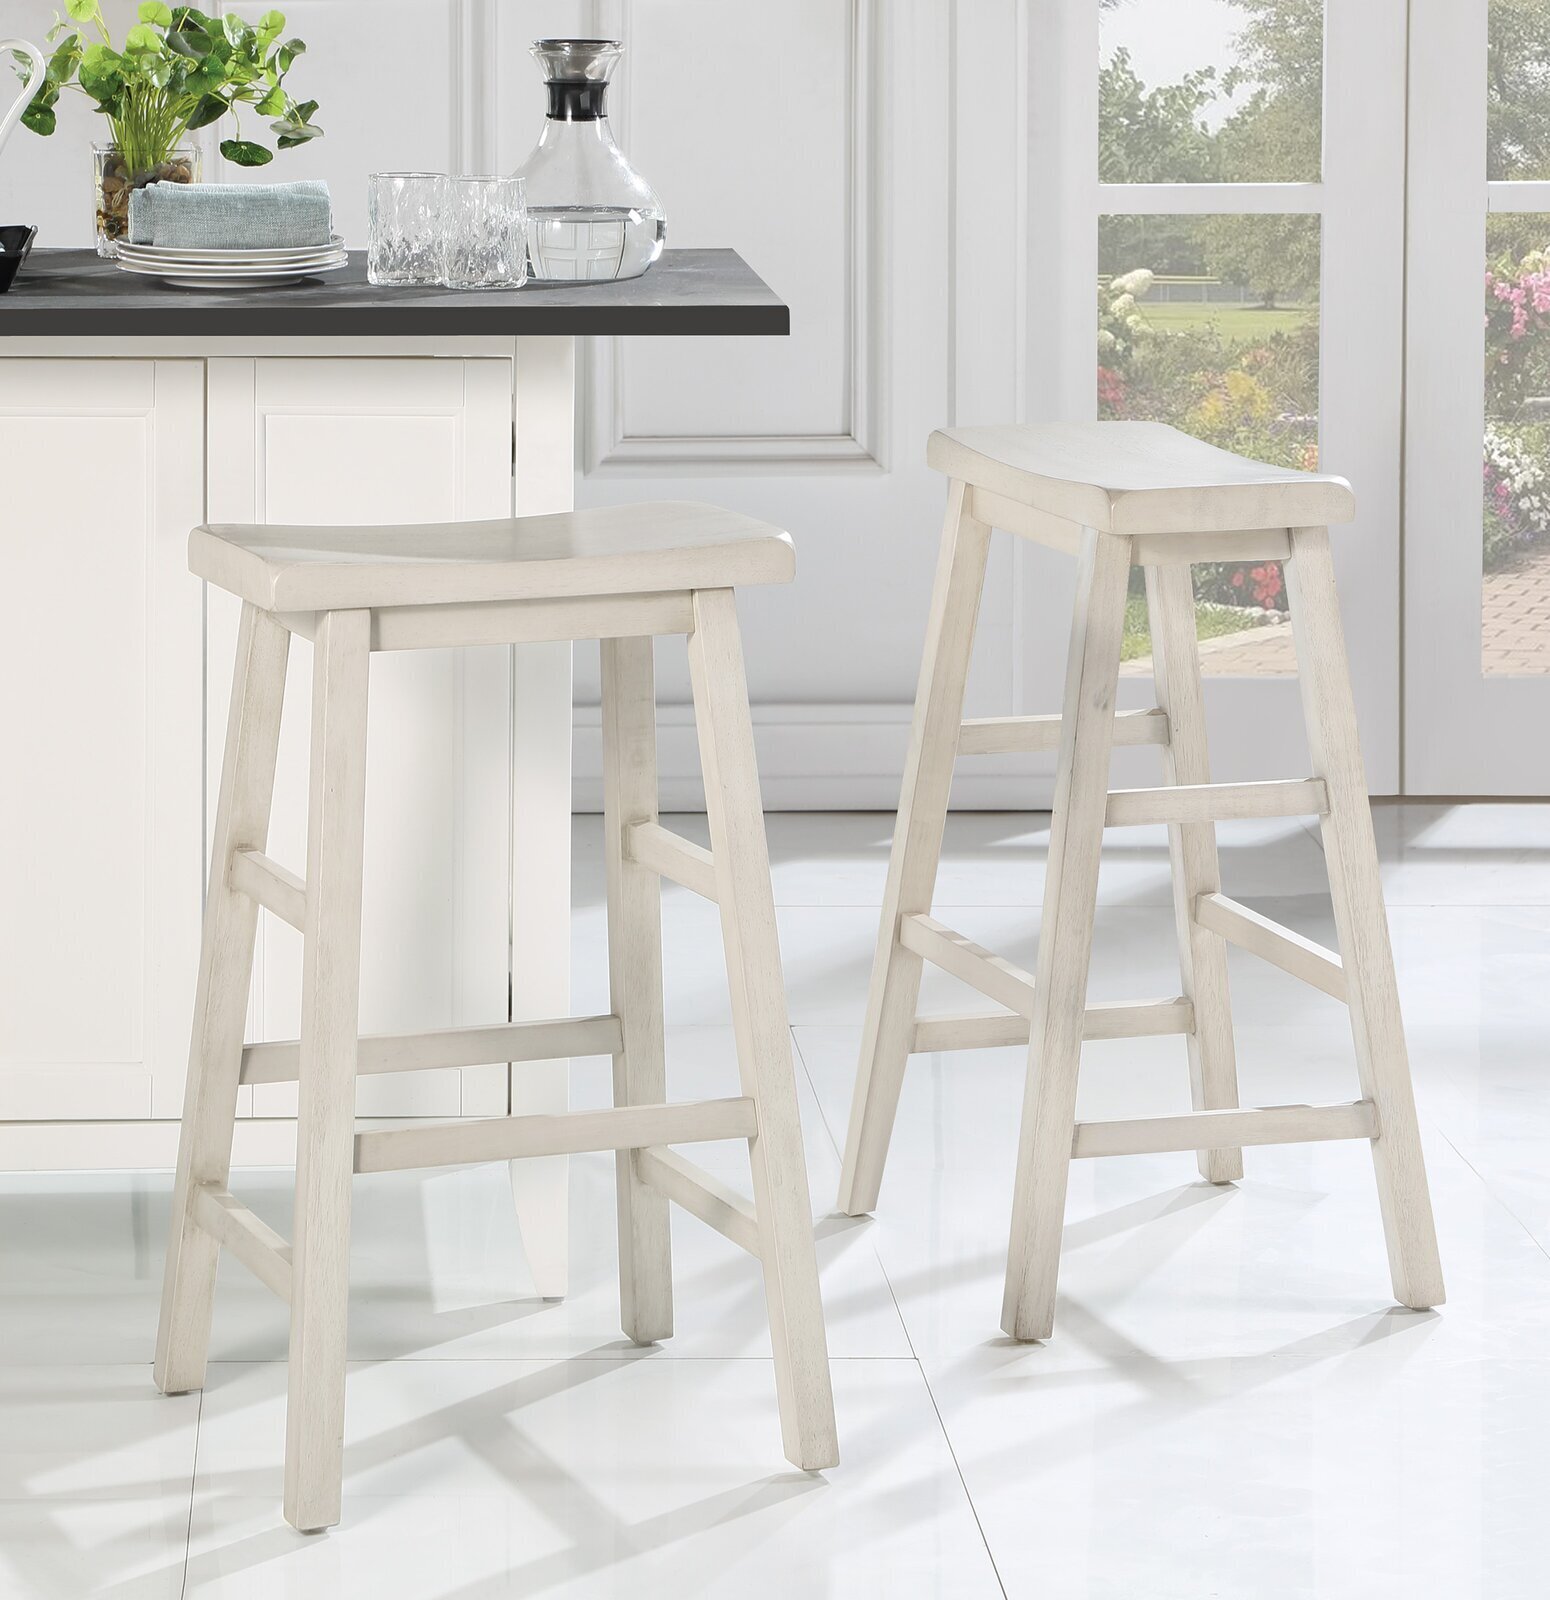 Backless cream wood bar stools